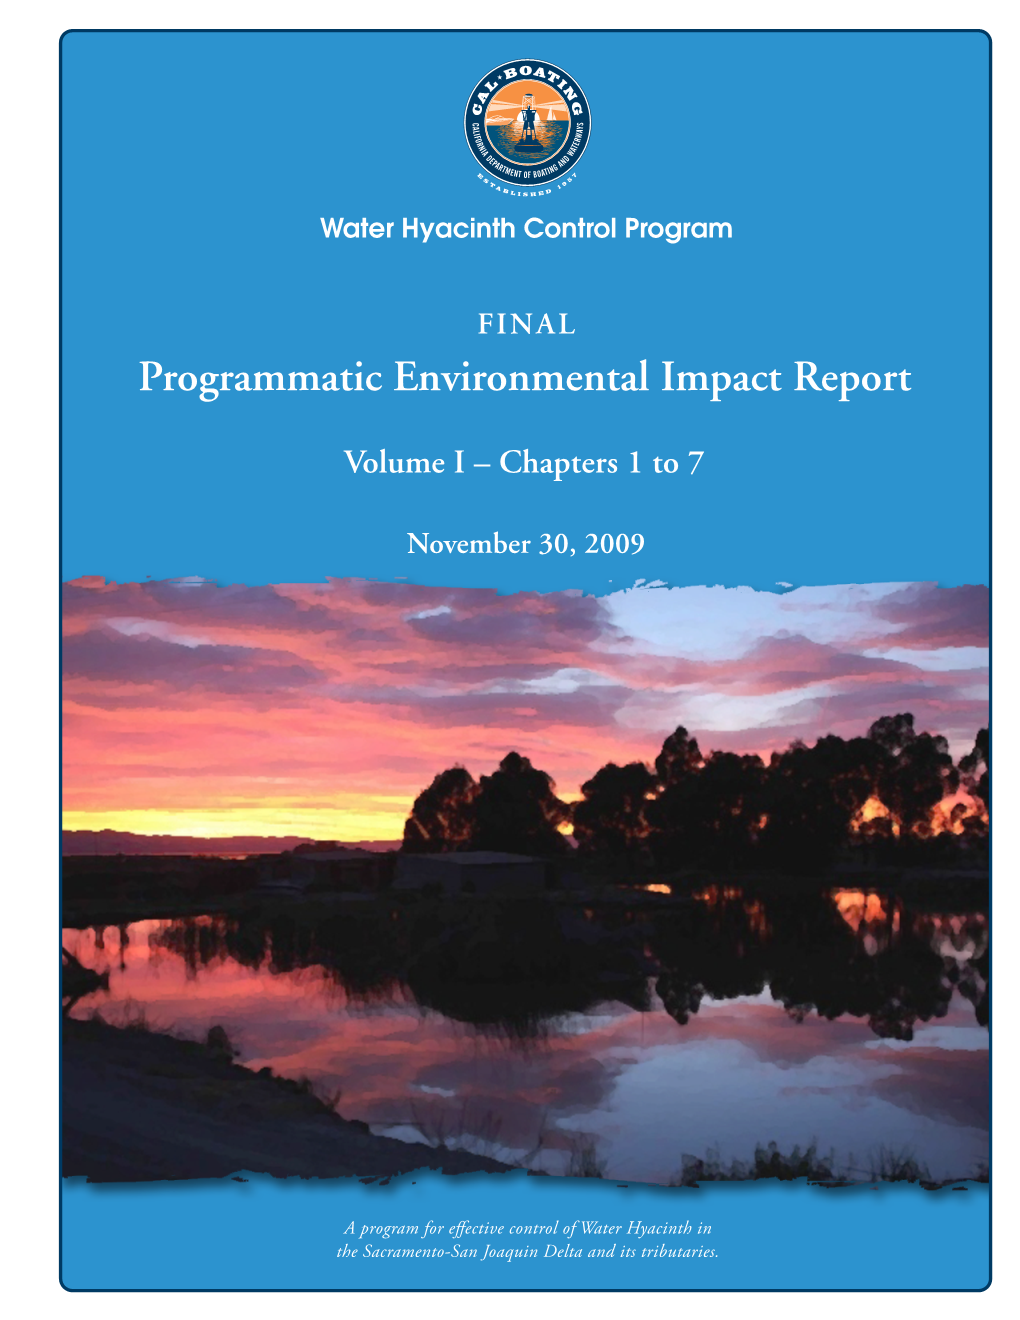 Programmatic Environmental Impact Report